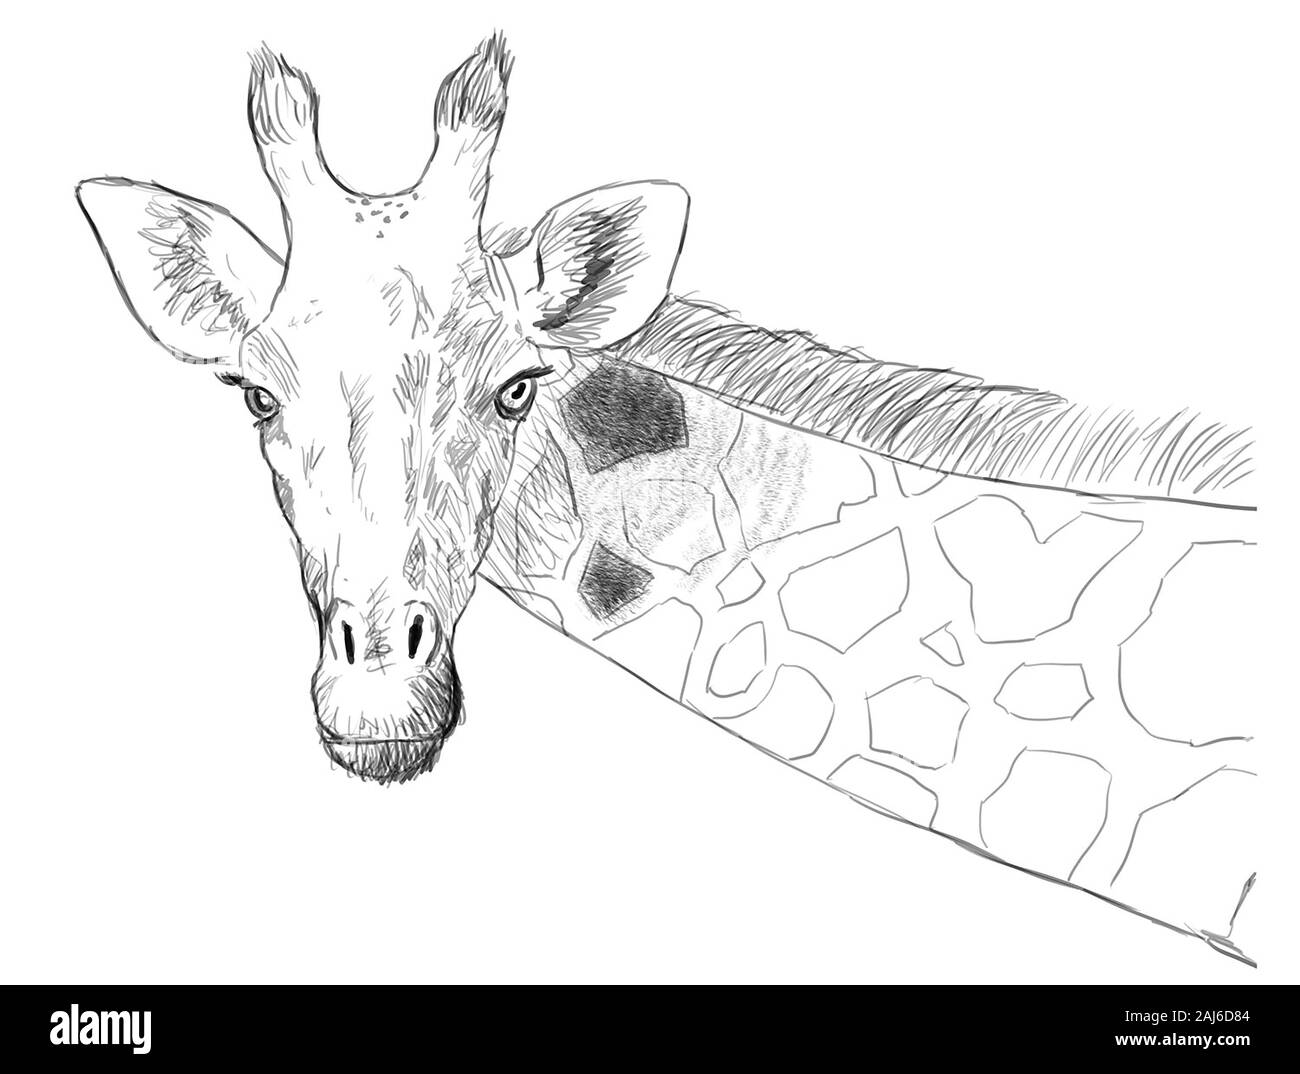 giraffe digital ink illustration Stock Photo